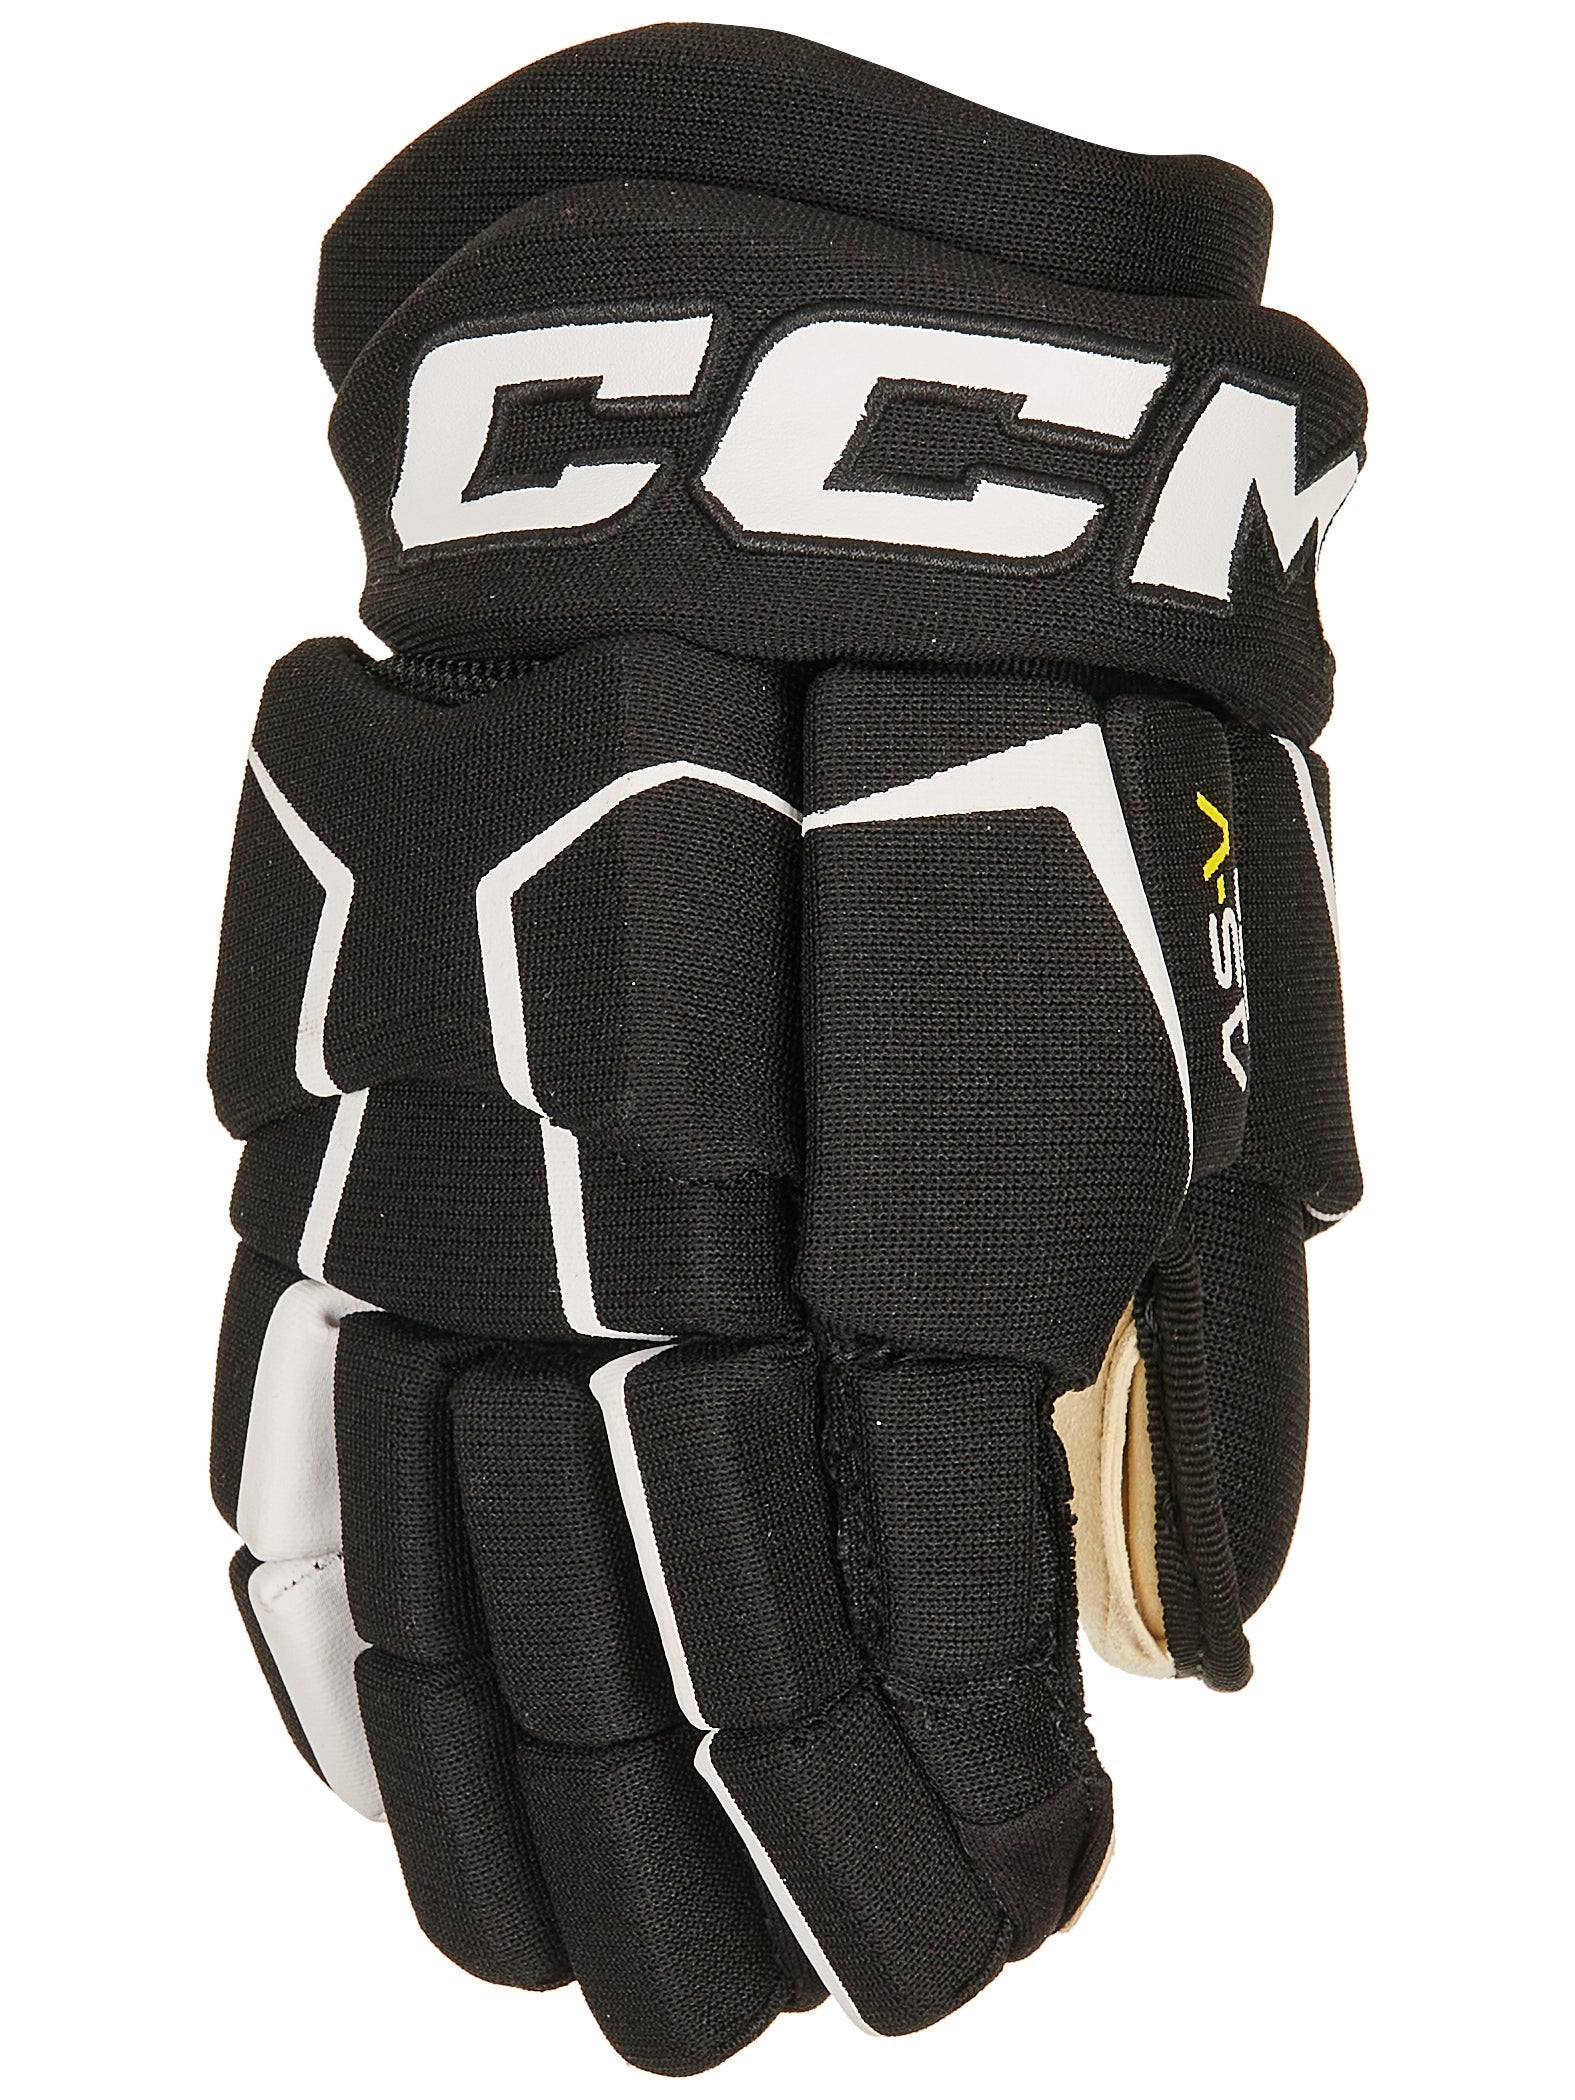 New CCM 252 Powerline Lock Thumb 14” Ice Hockey Gloves Black White 